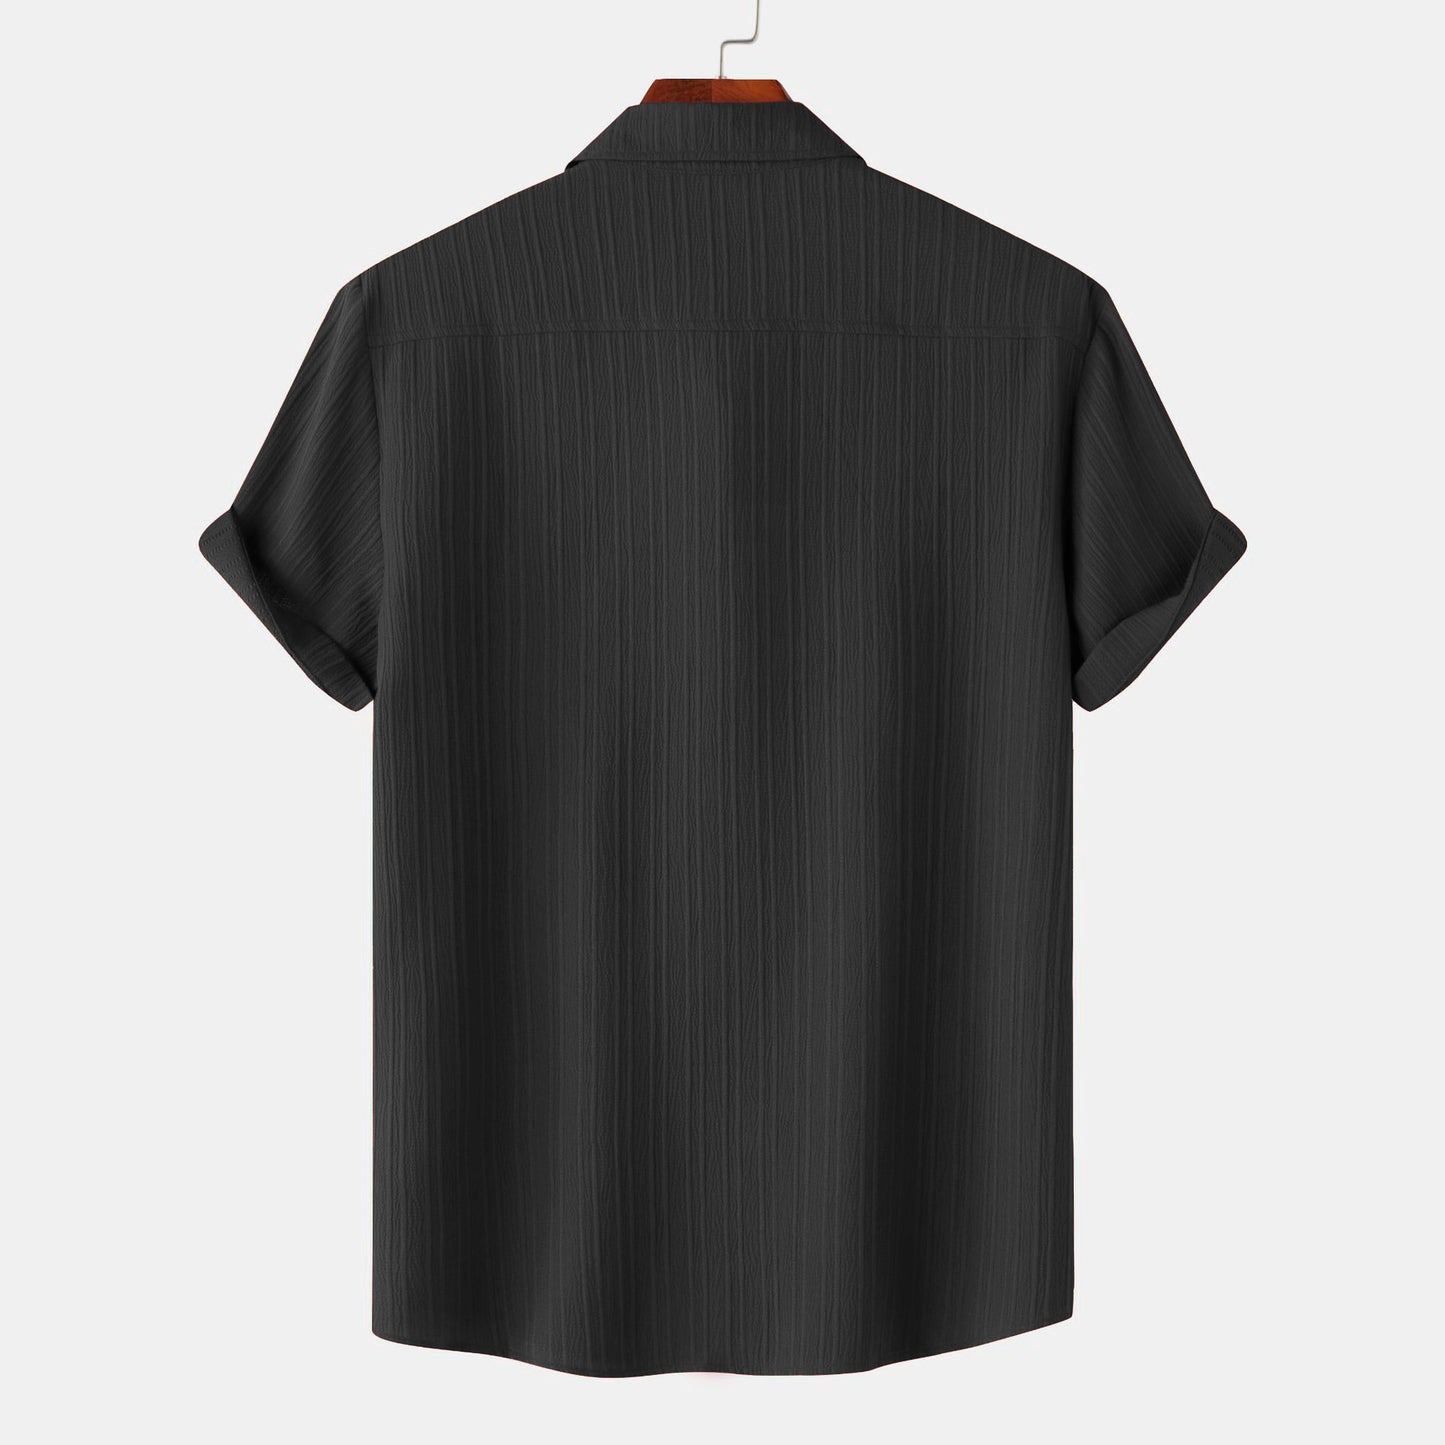 Black colour lining structure shirt